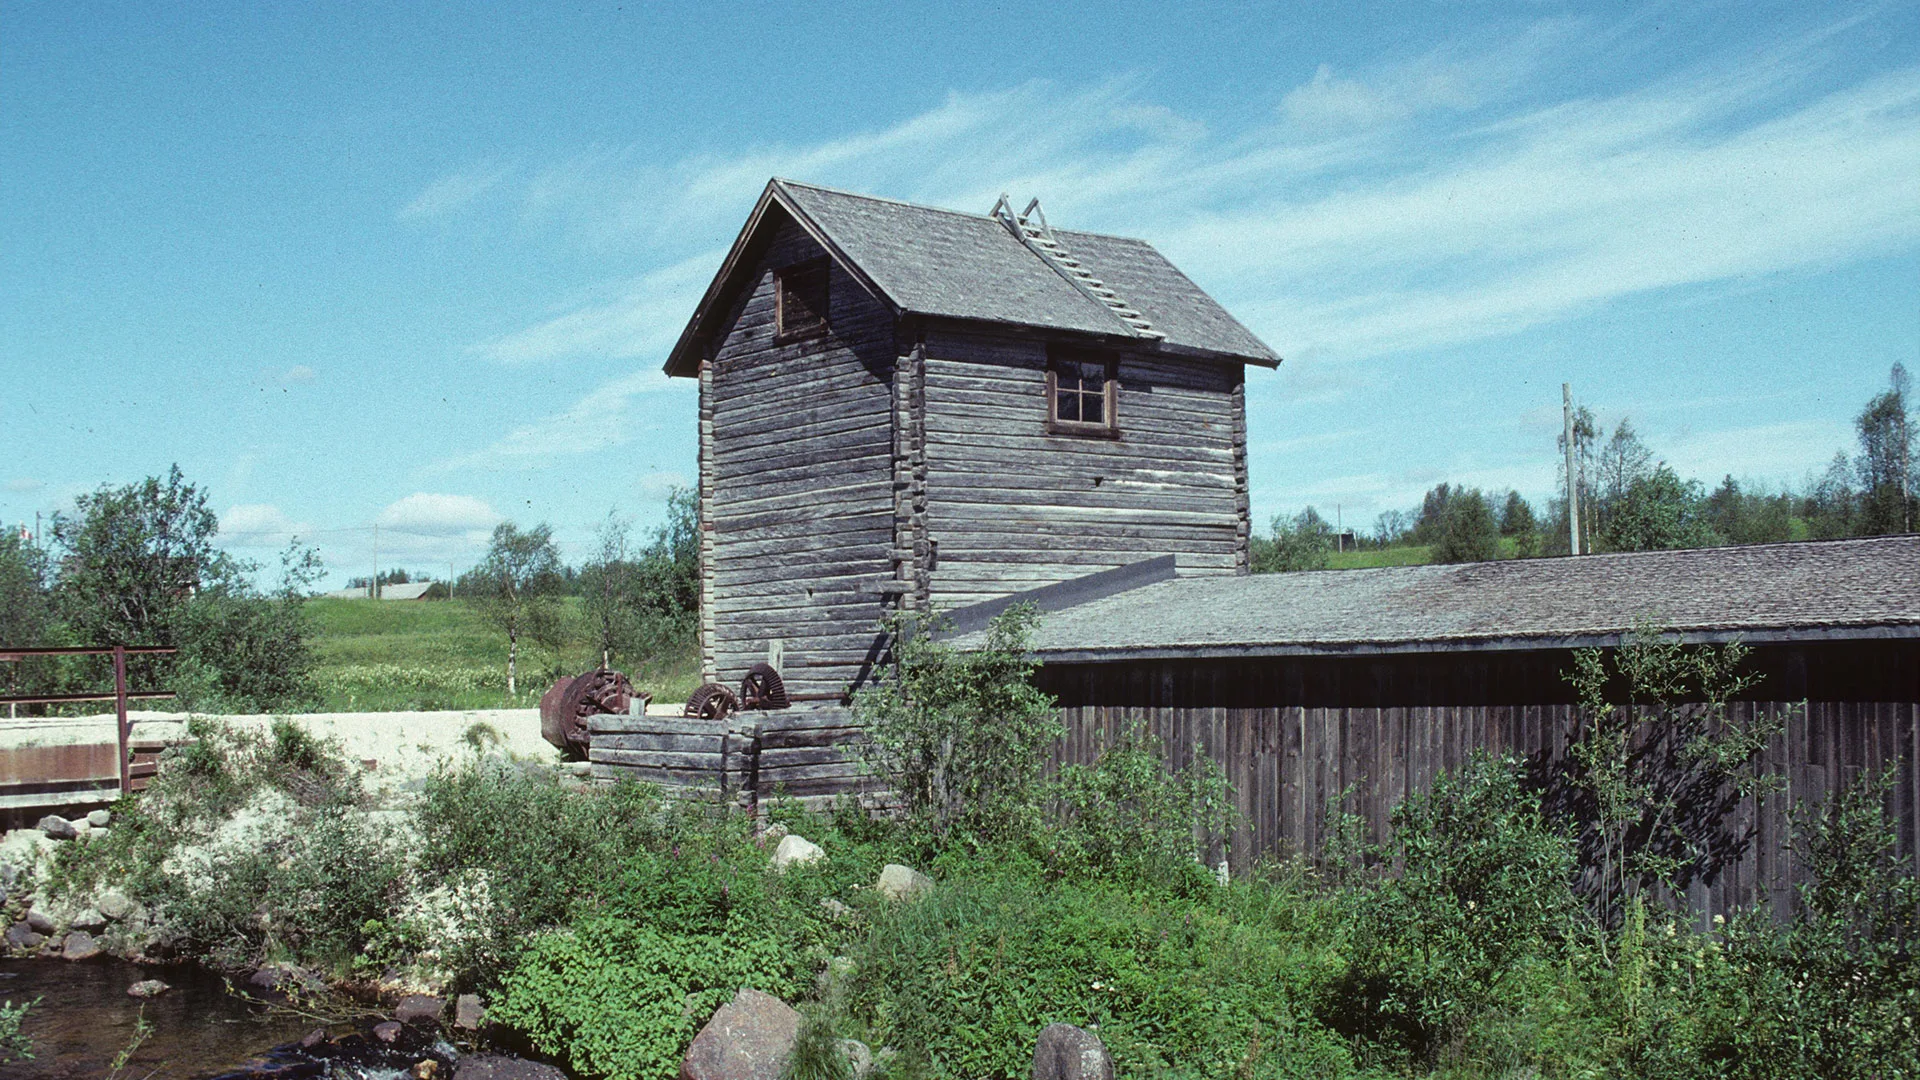 Gammalt gruvområde i Masugnsbyn. Foto: John-Eric Gustafsson (cc by 4.0)